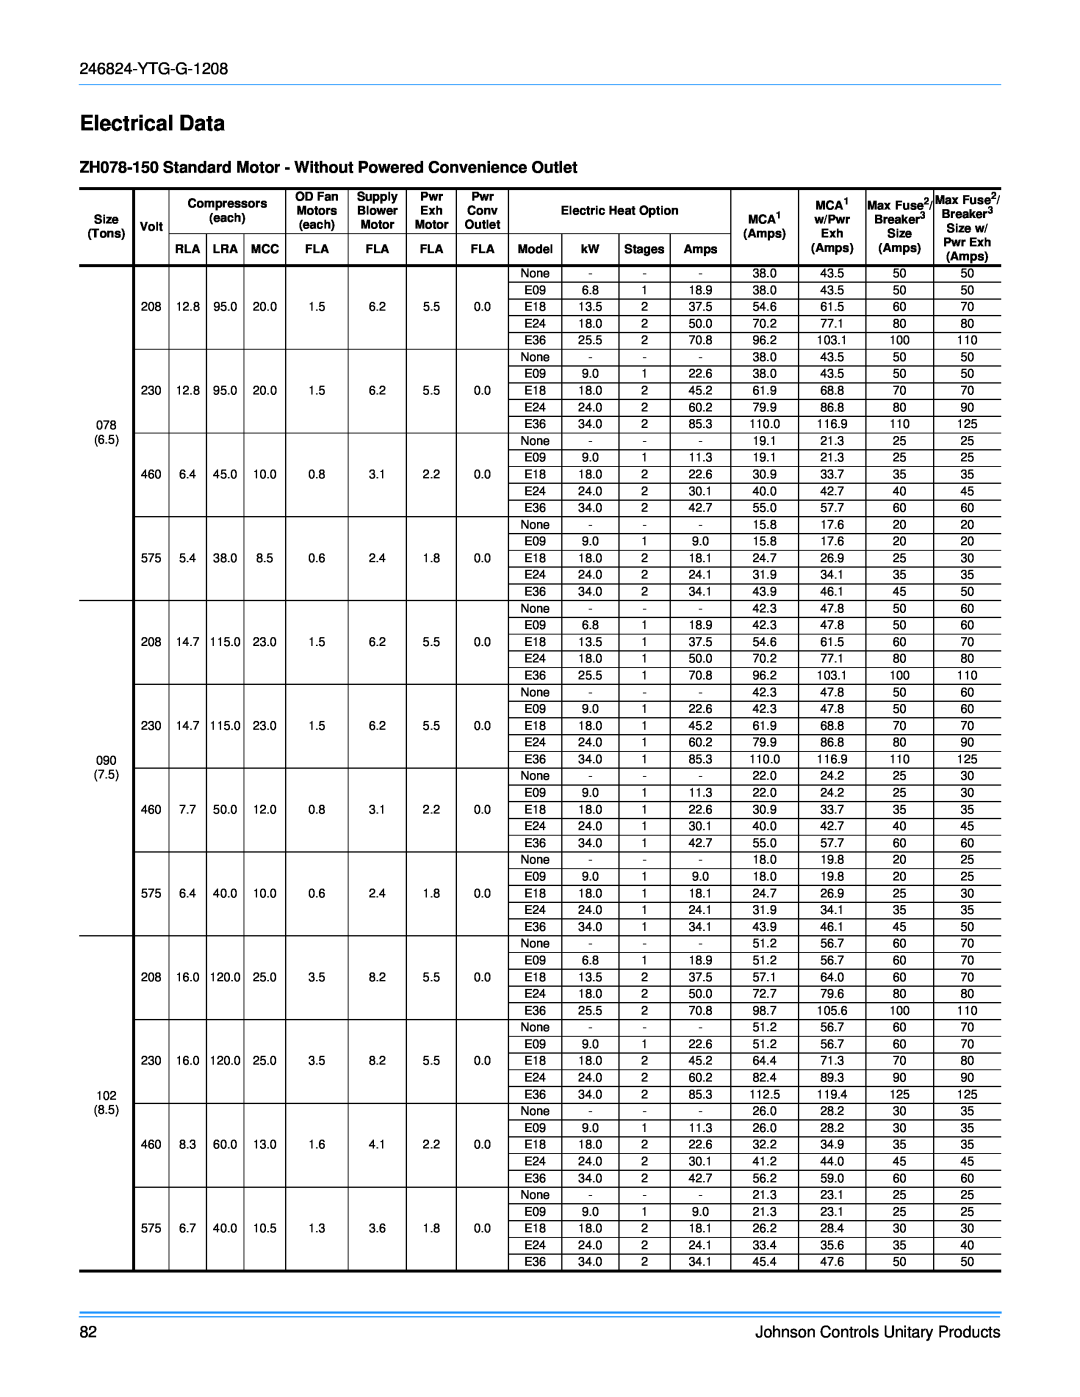 York R-410A manual Electrical Data 